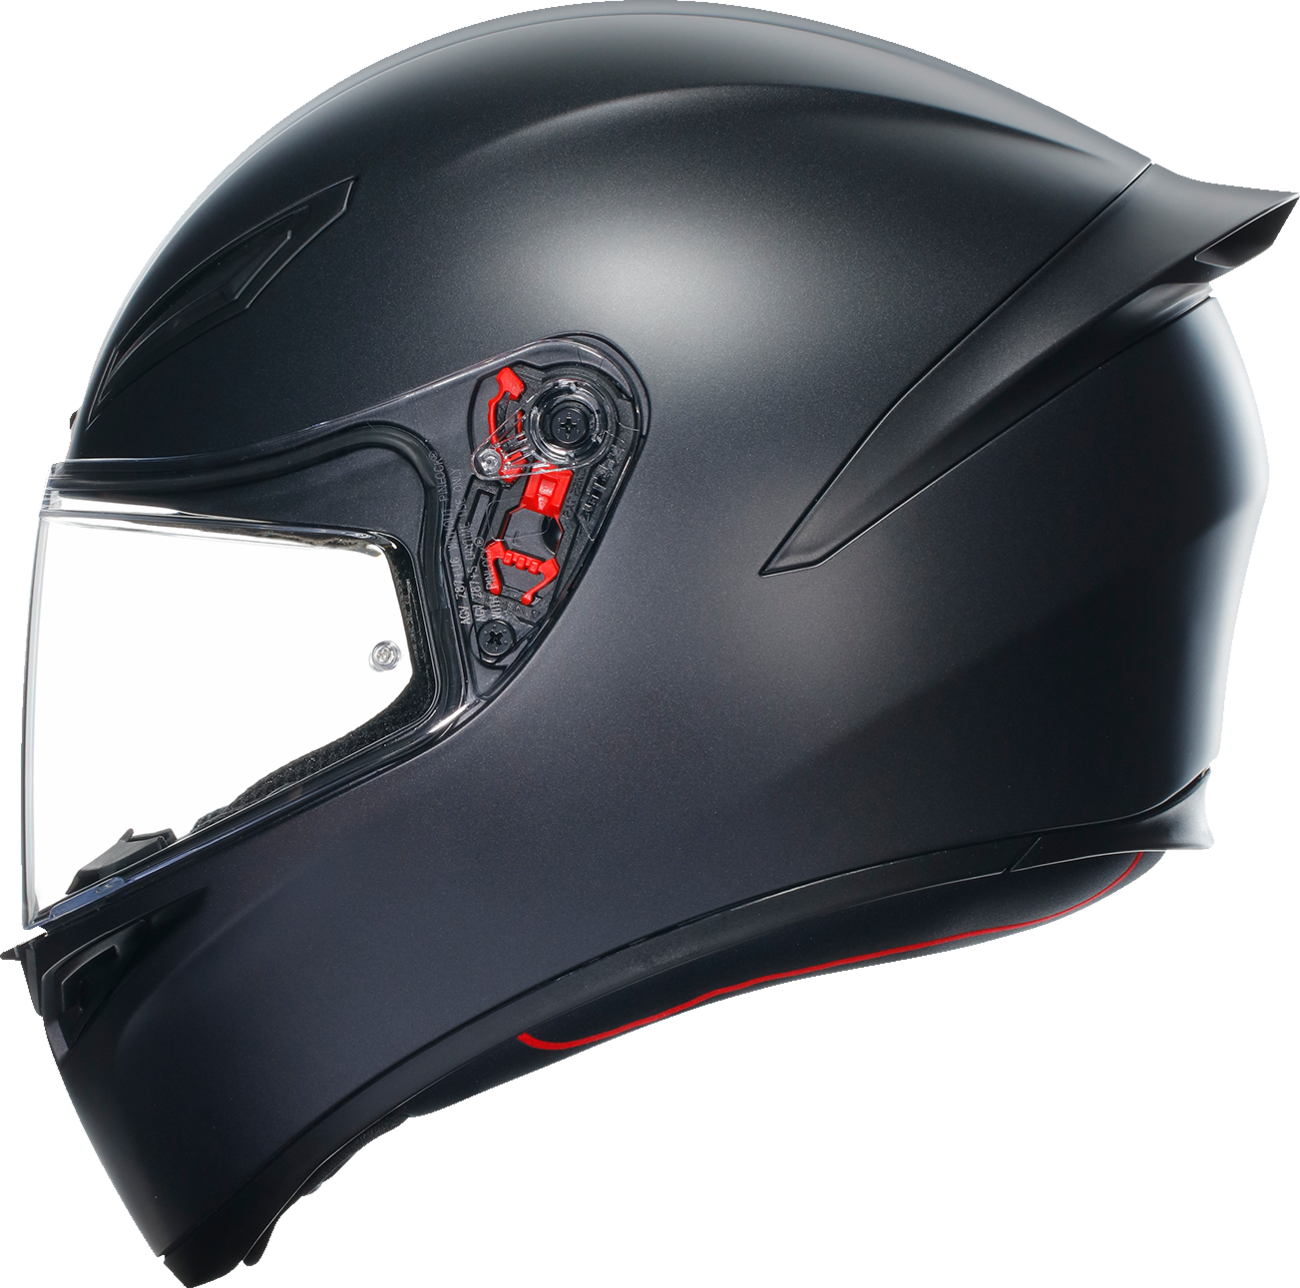 AGV K1 S Helmet - Matte Black - Medium 2118394003029M